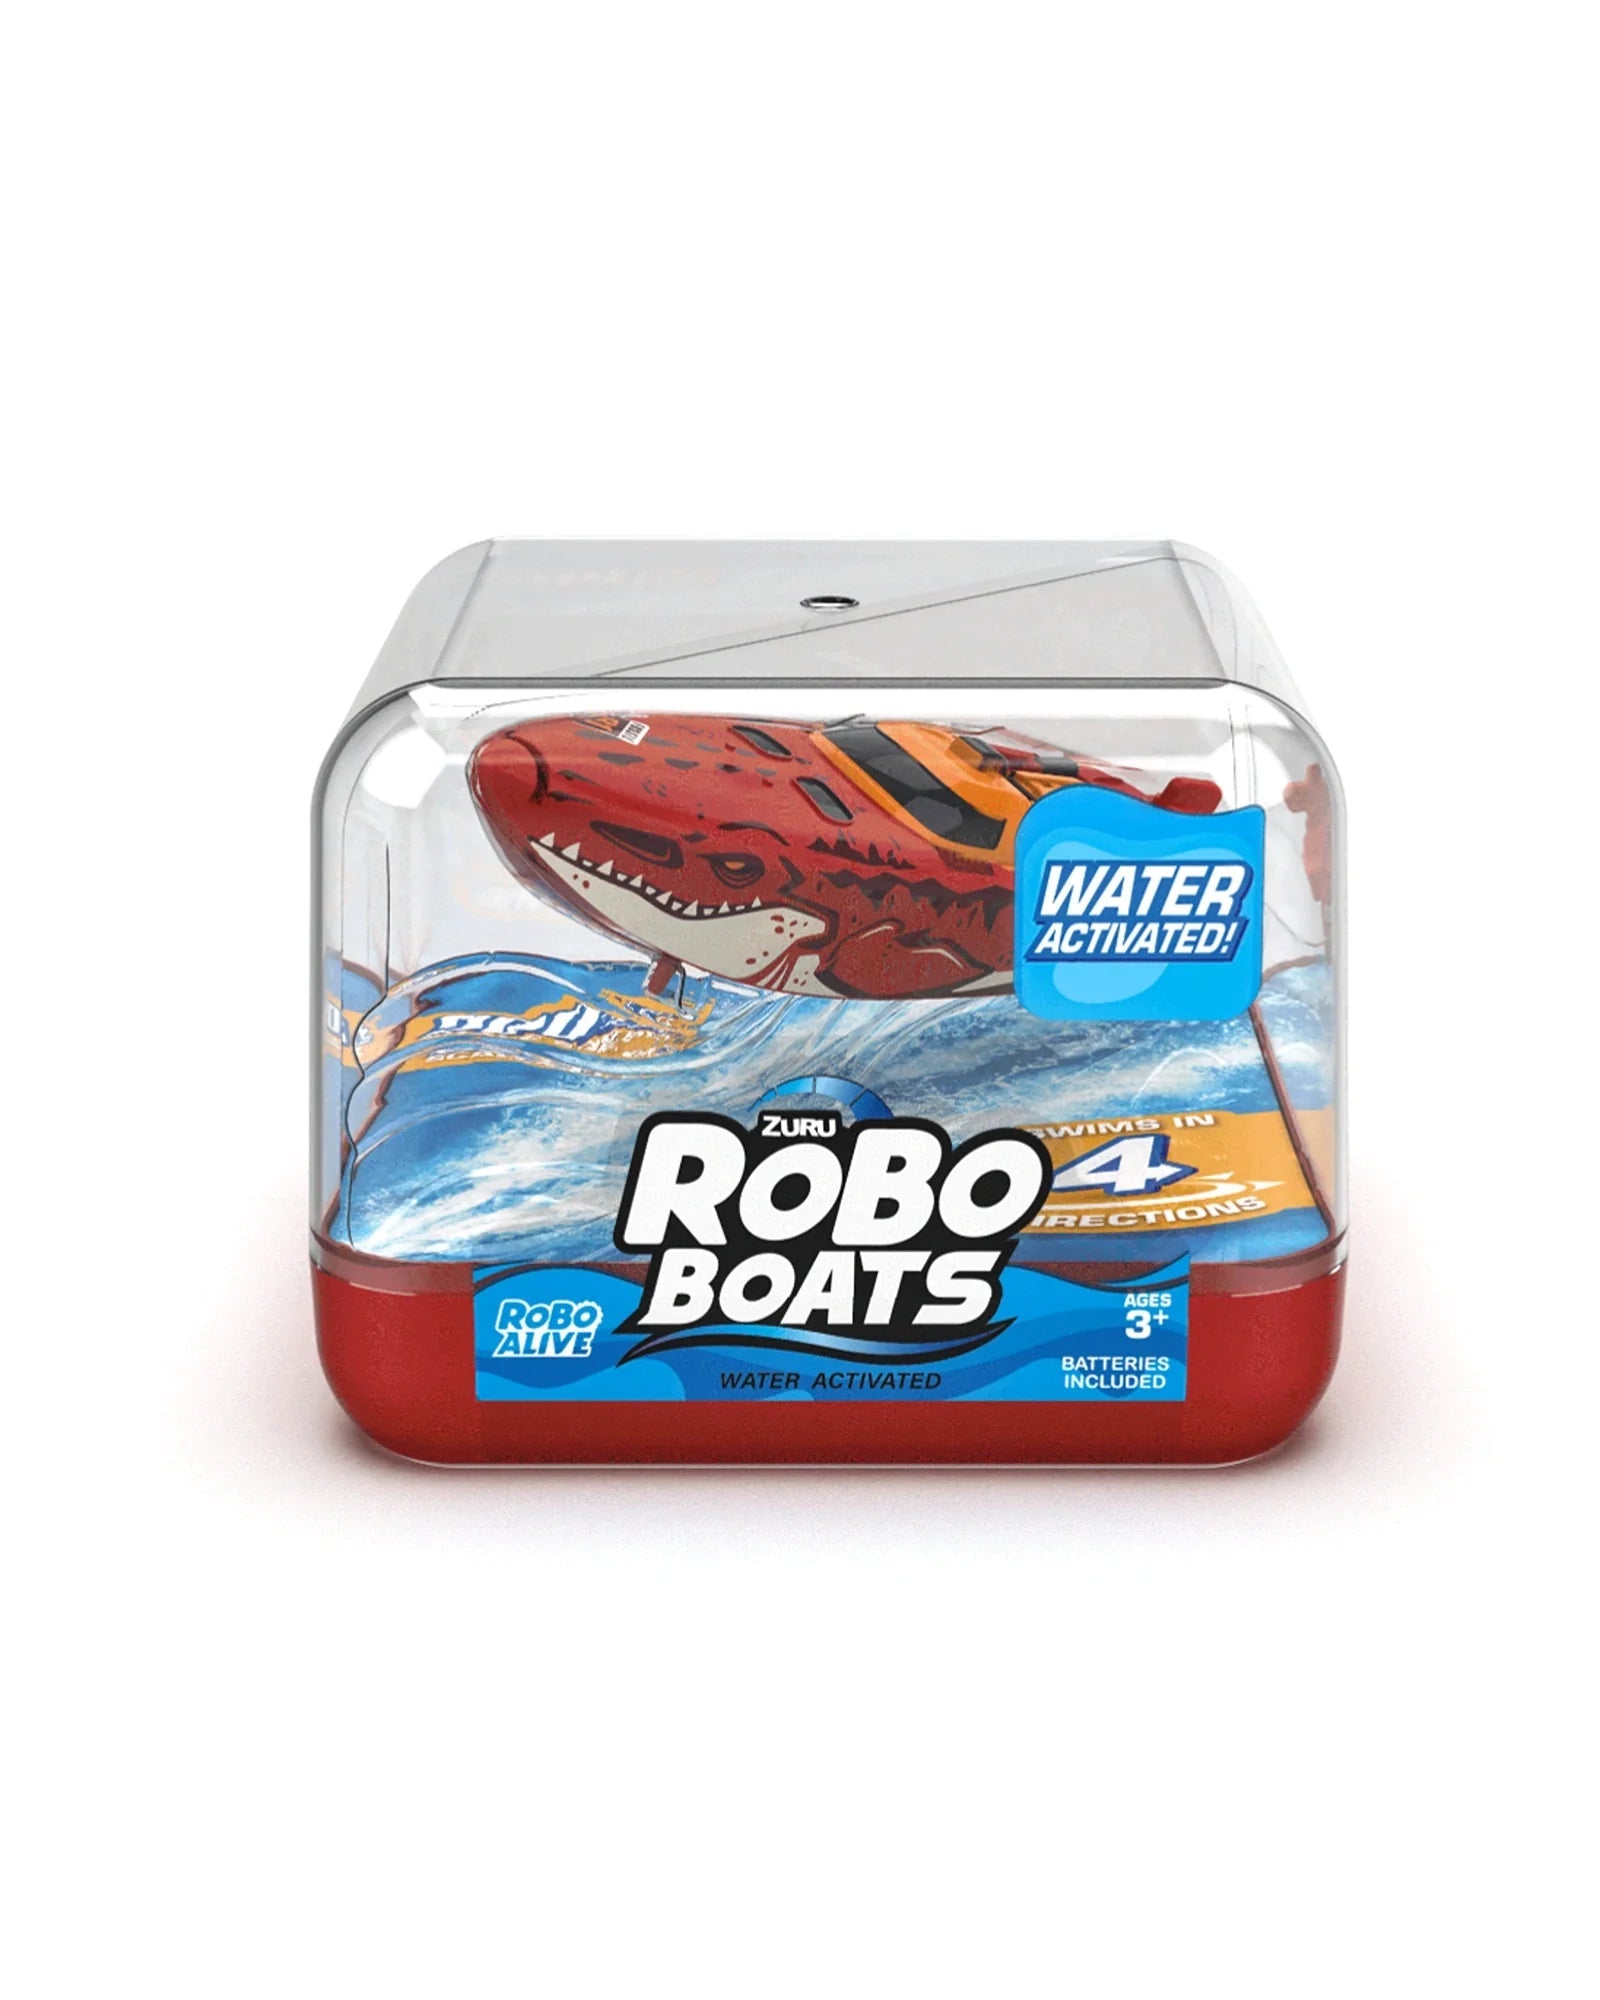 ZURU S001-Robo Alive Series 1 قوارب روبوتية - أحمر